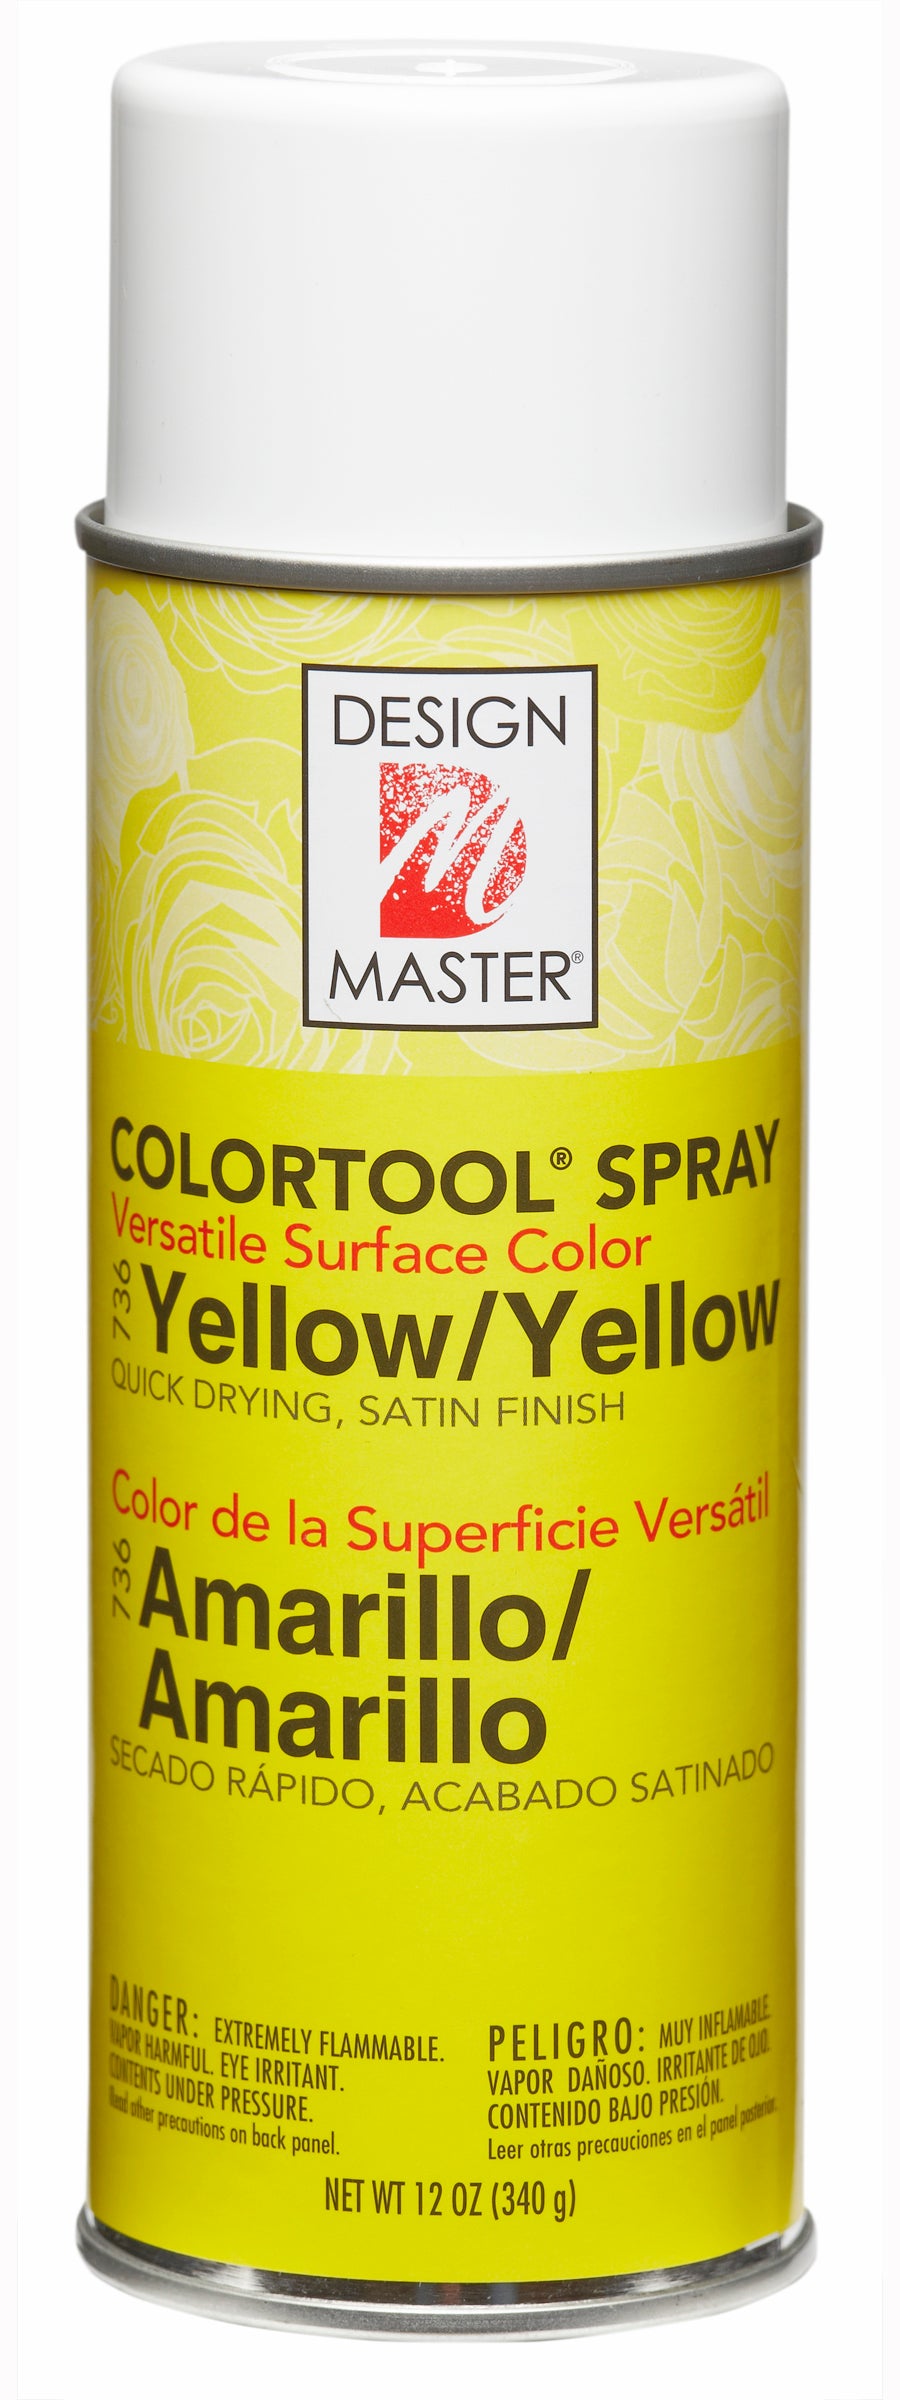 Design Master Colortool Spray-Yellow Yellow